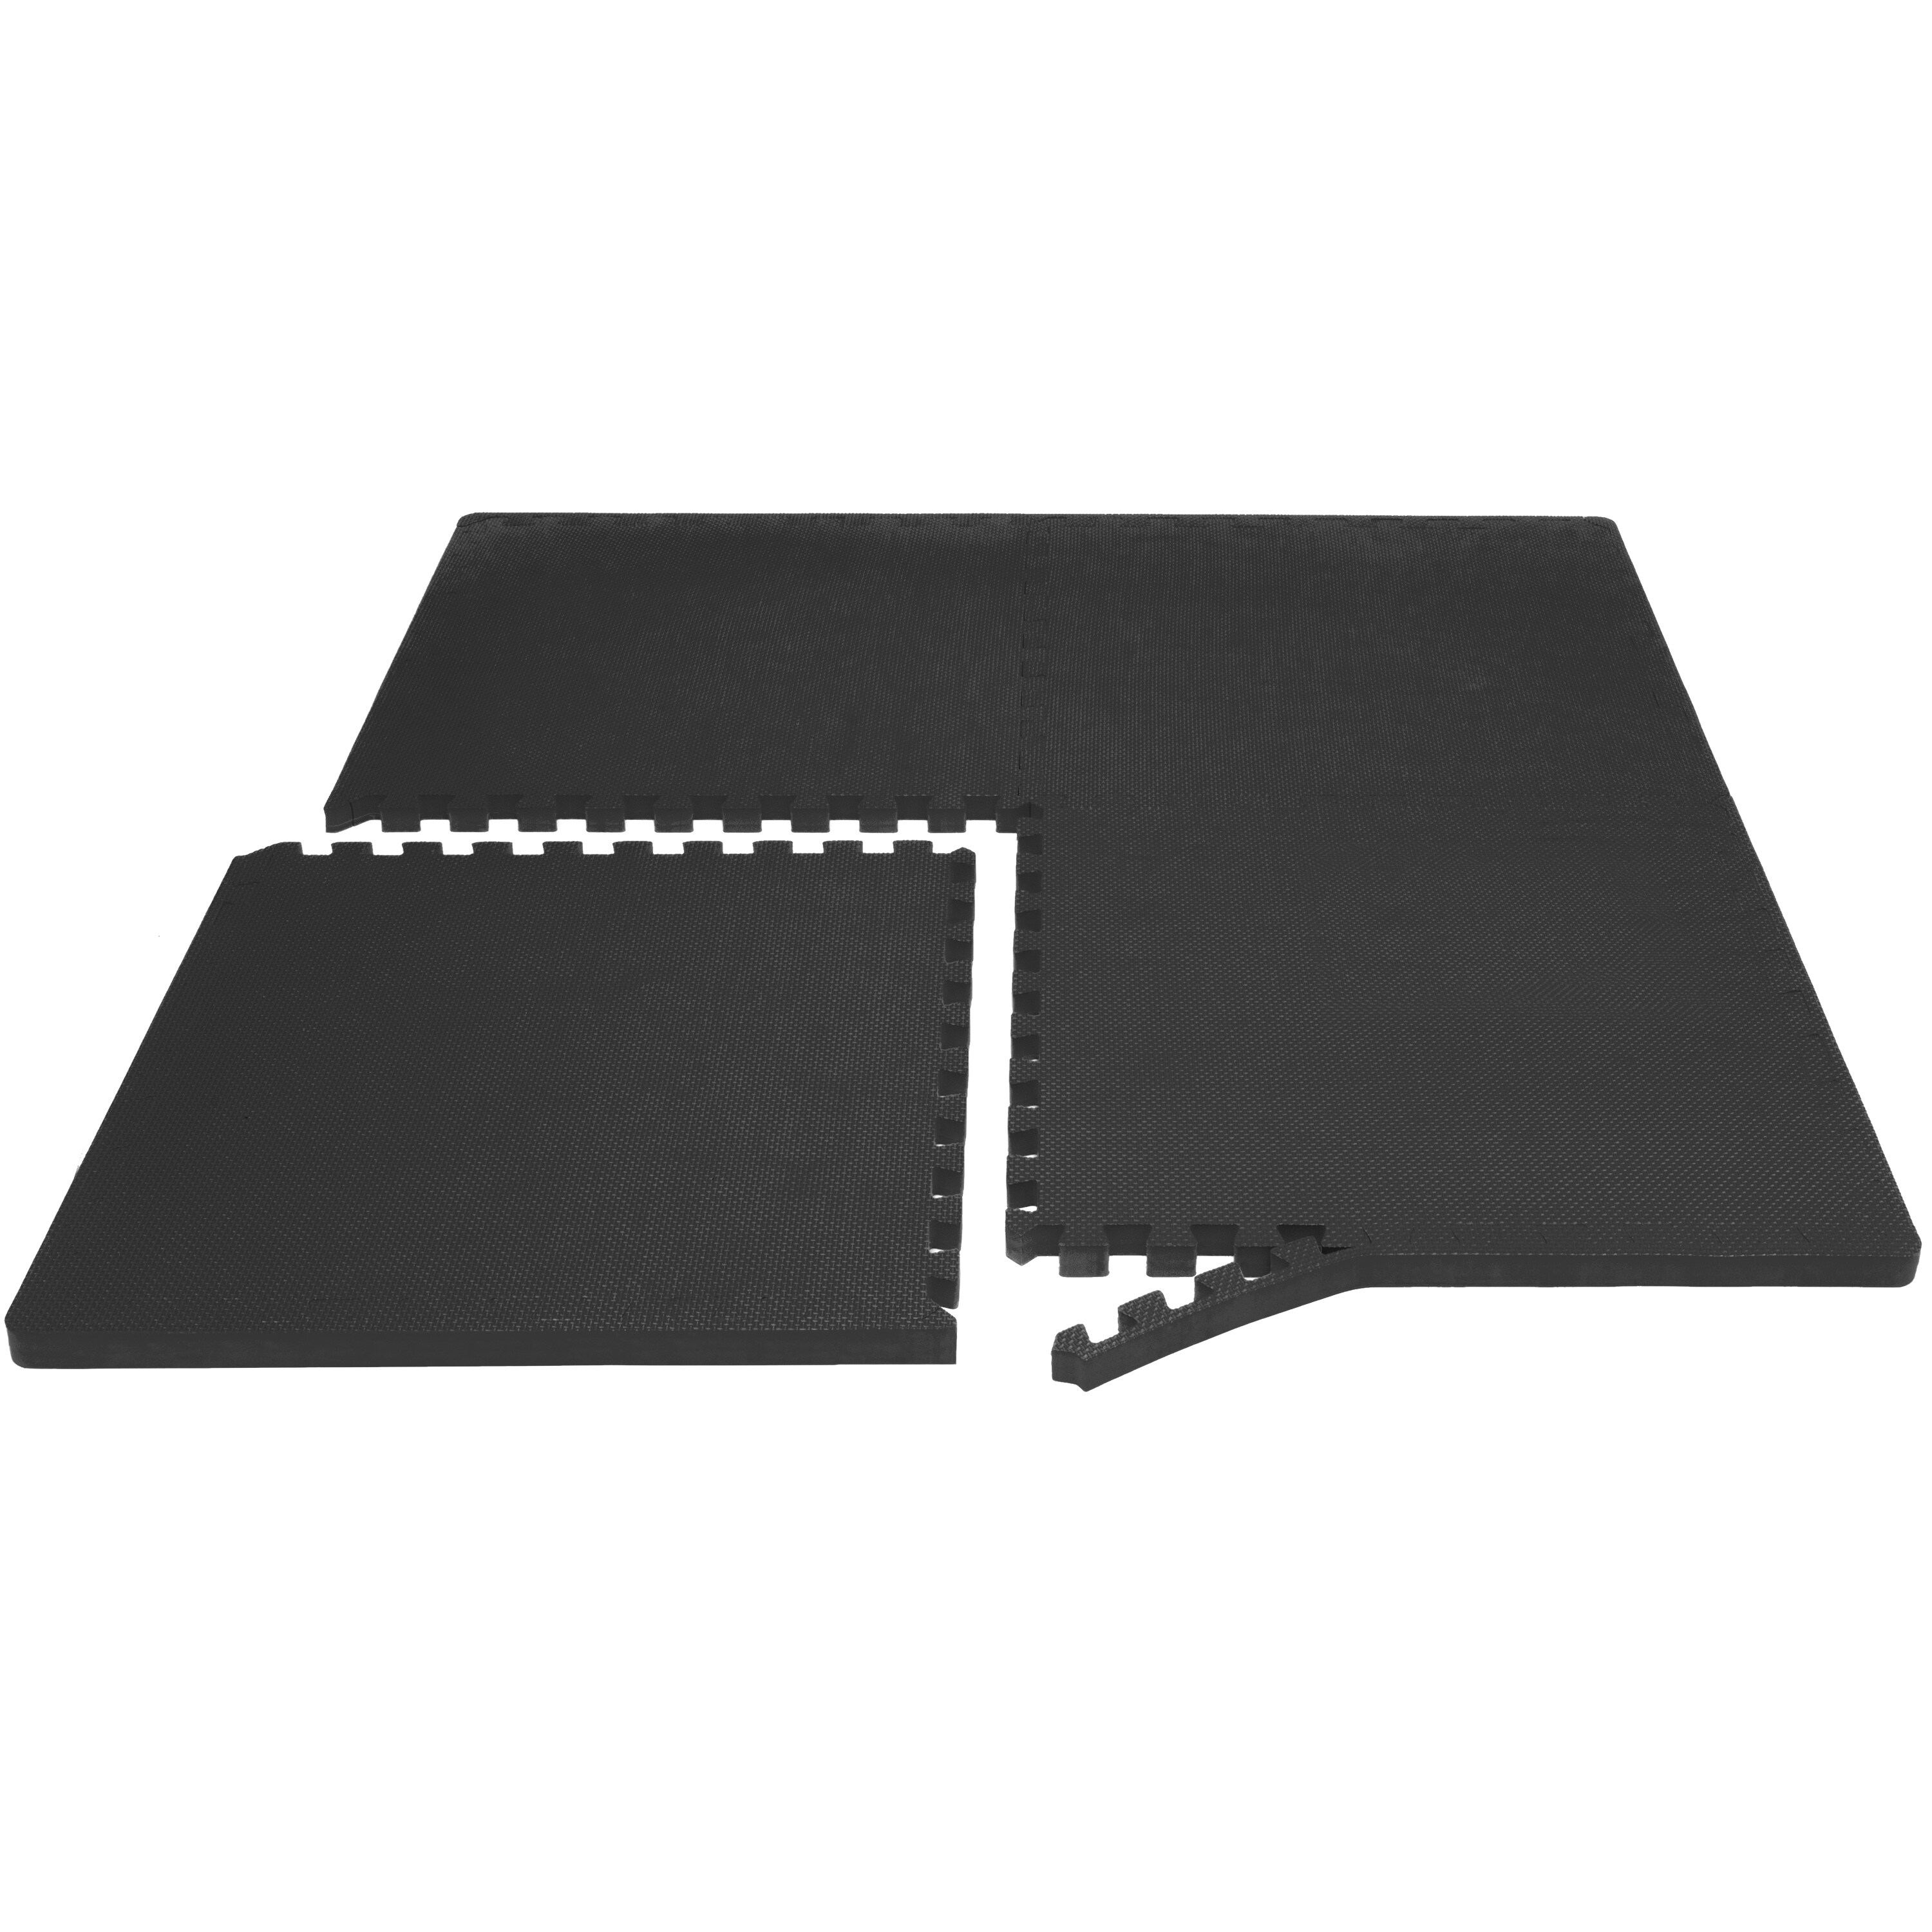 24 sq ft pink interlocking foam floor puzzle tiles mats puzzle mat  flooring 